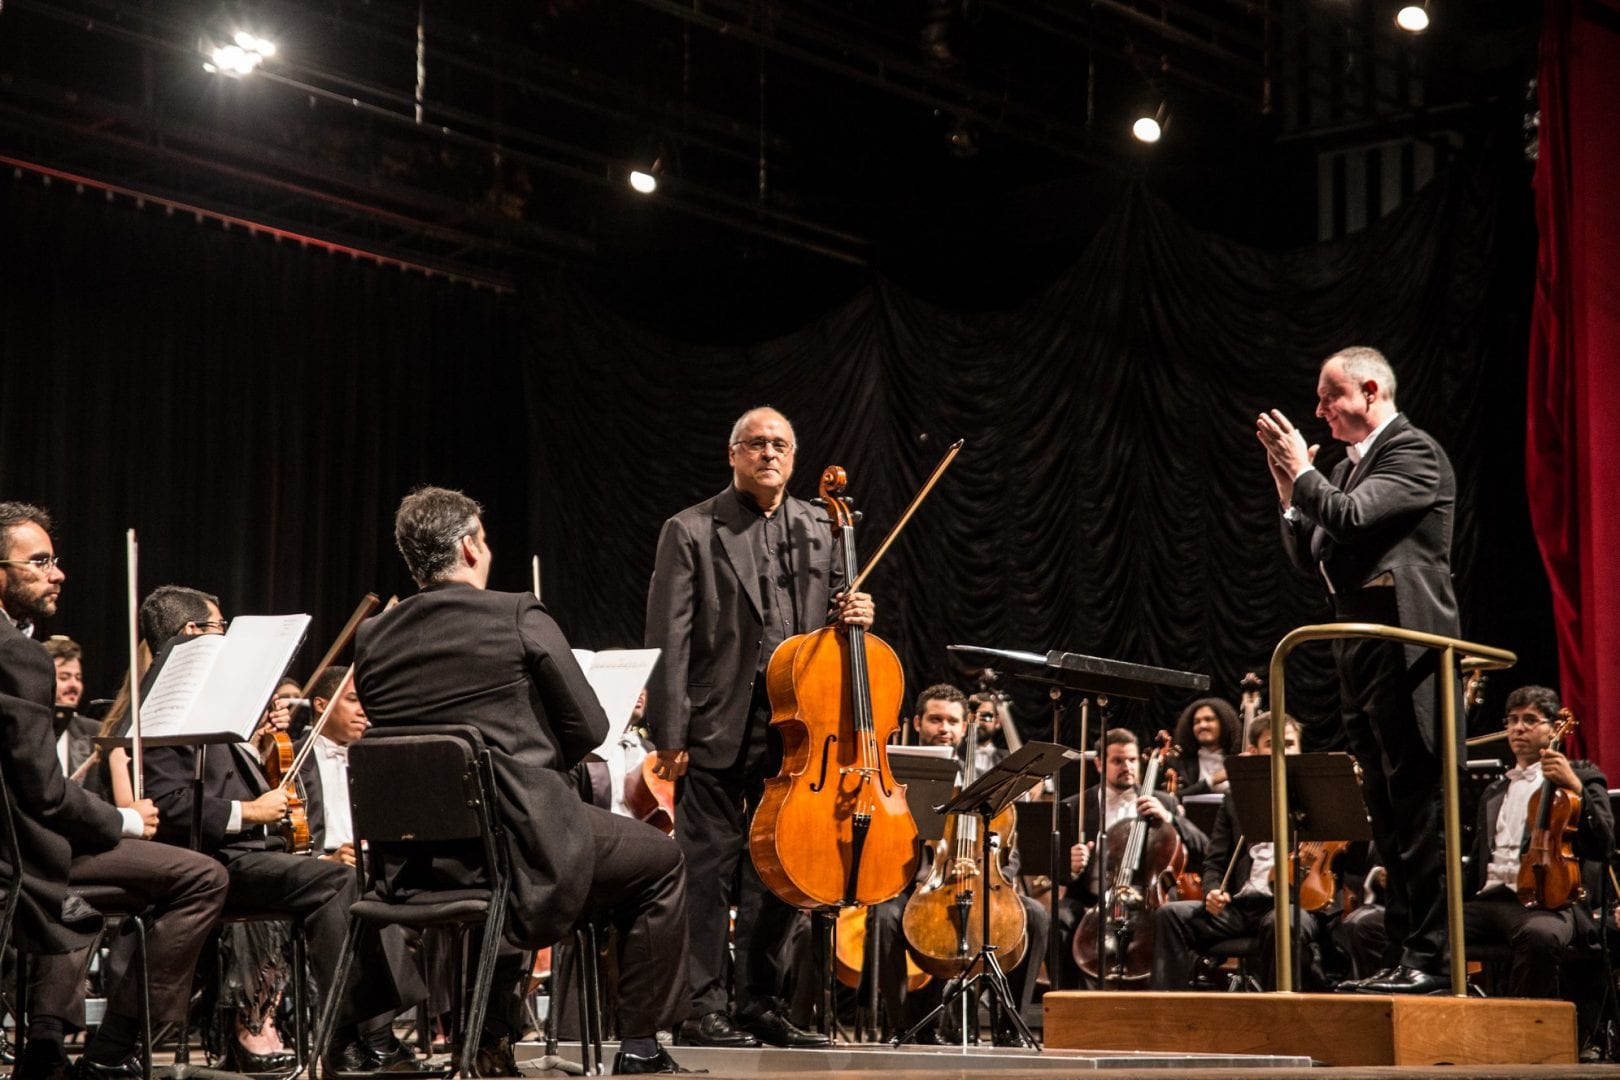 A Orquestra Filarmônica de Goiás se apresenta com Antonio Meneses